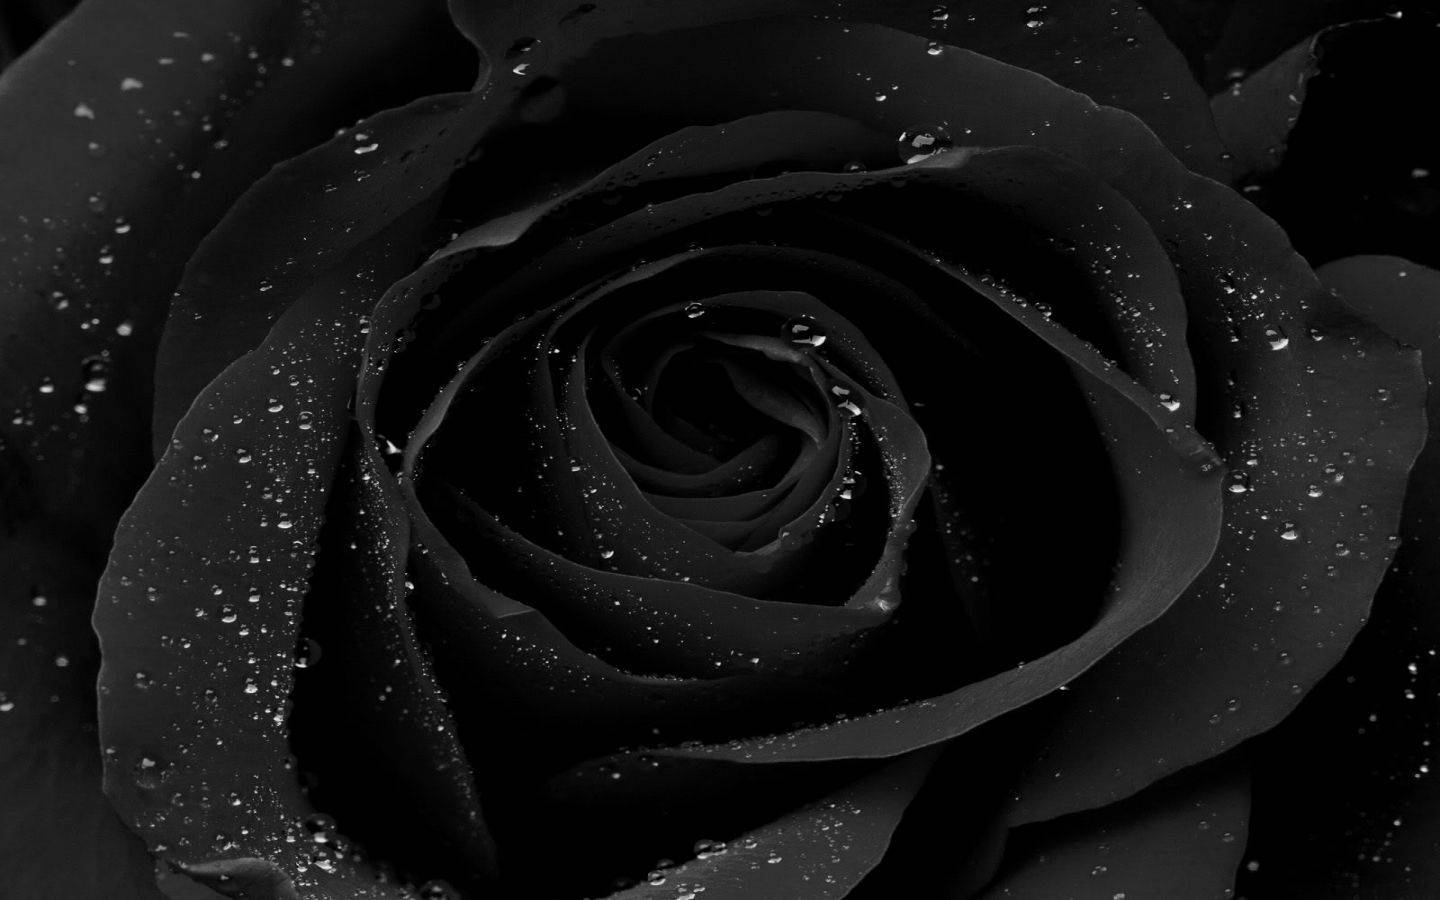 Water Droplets On Black Rose Background